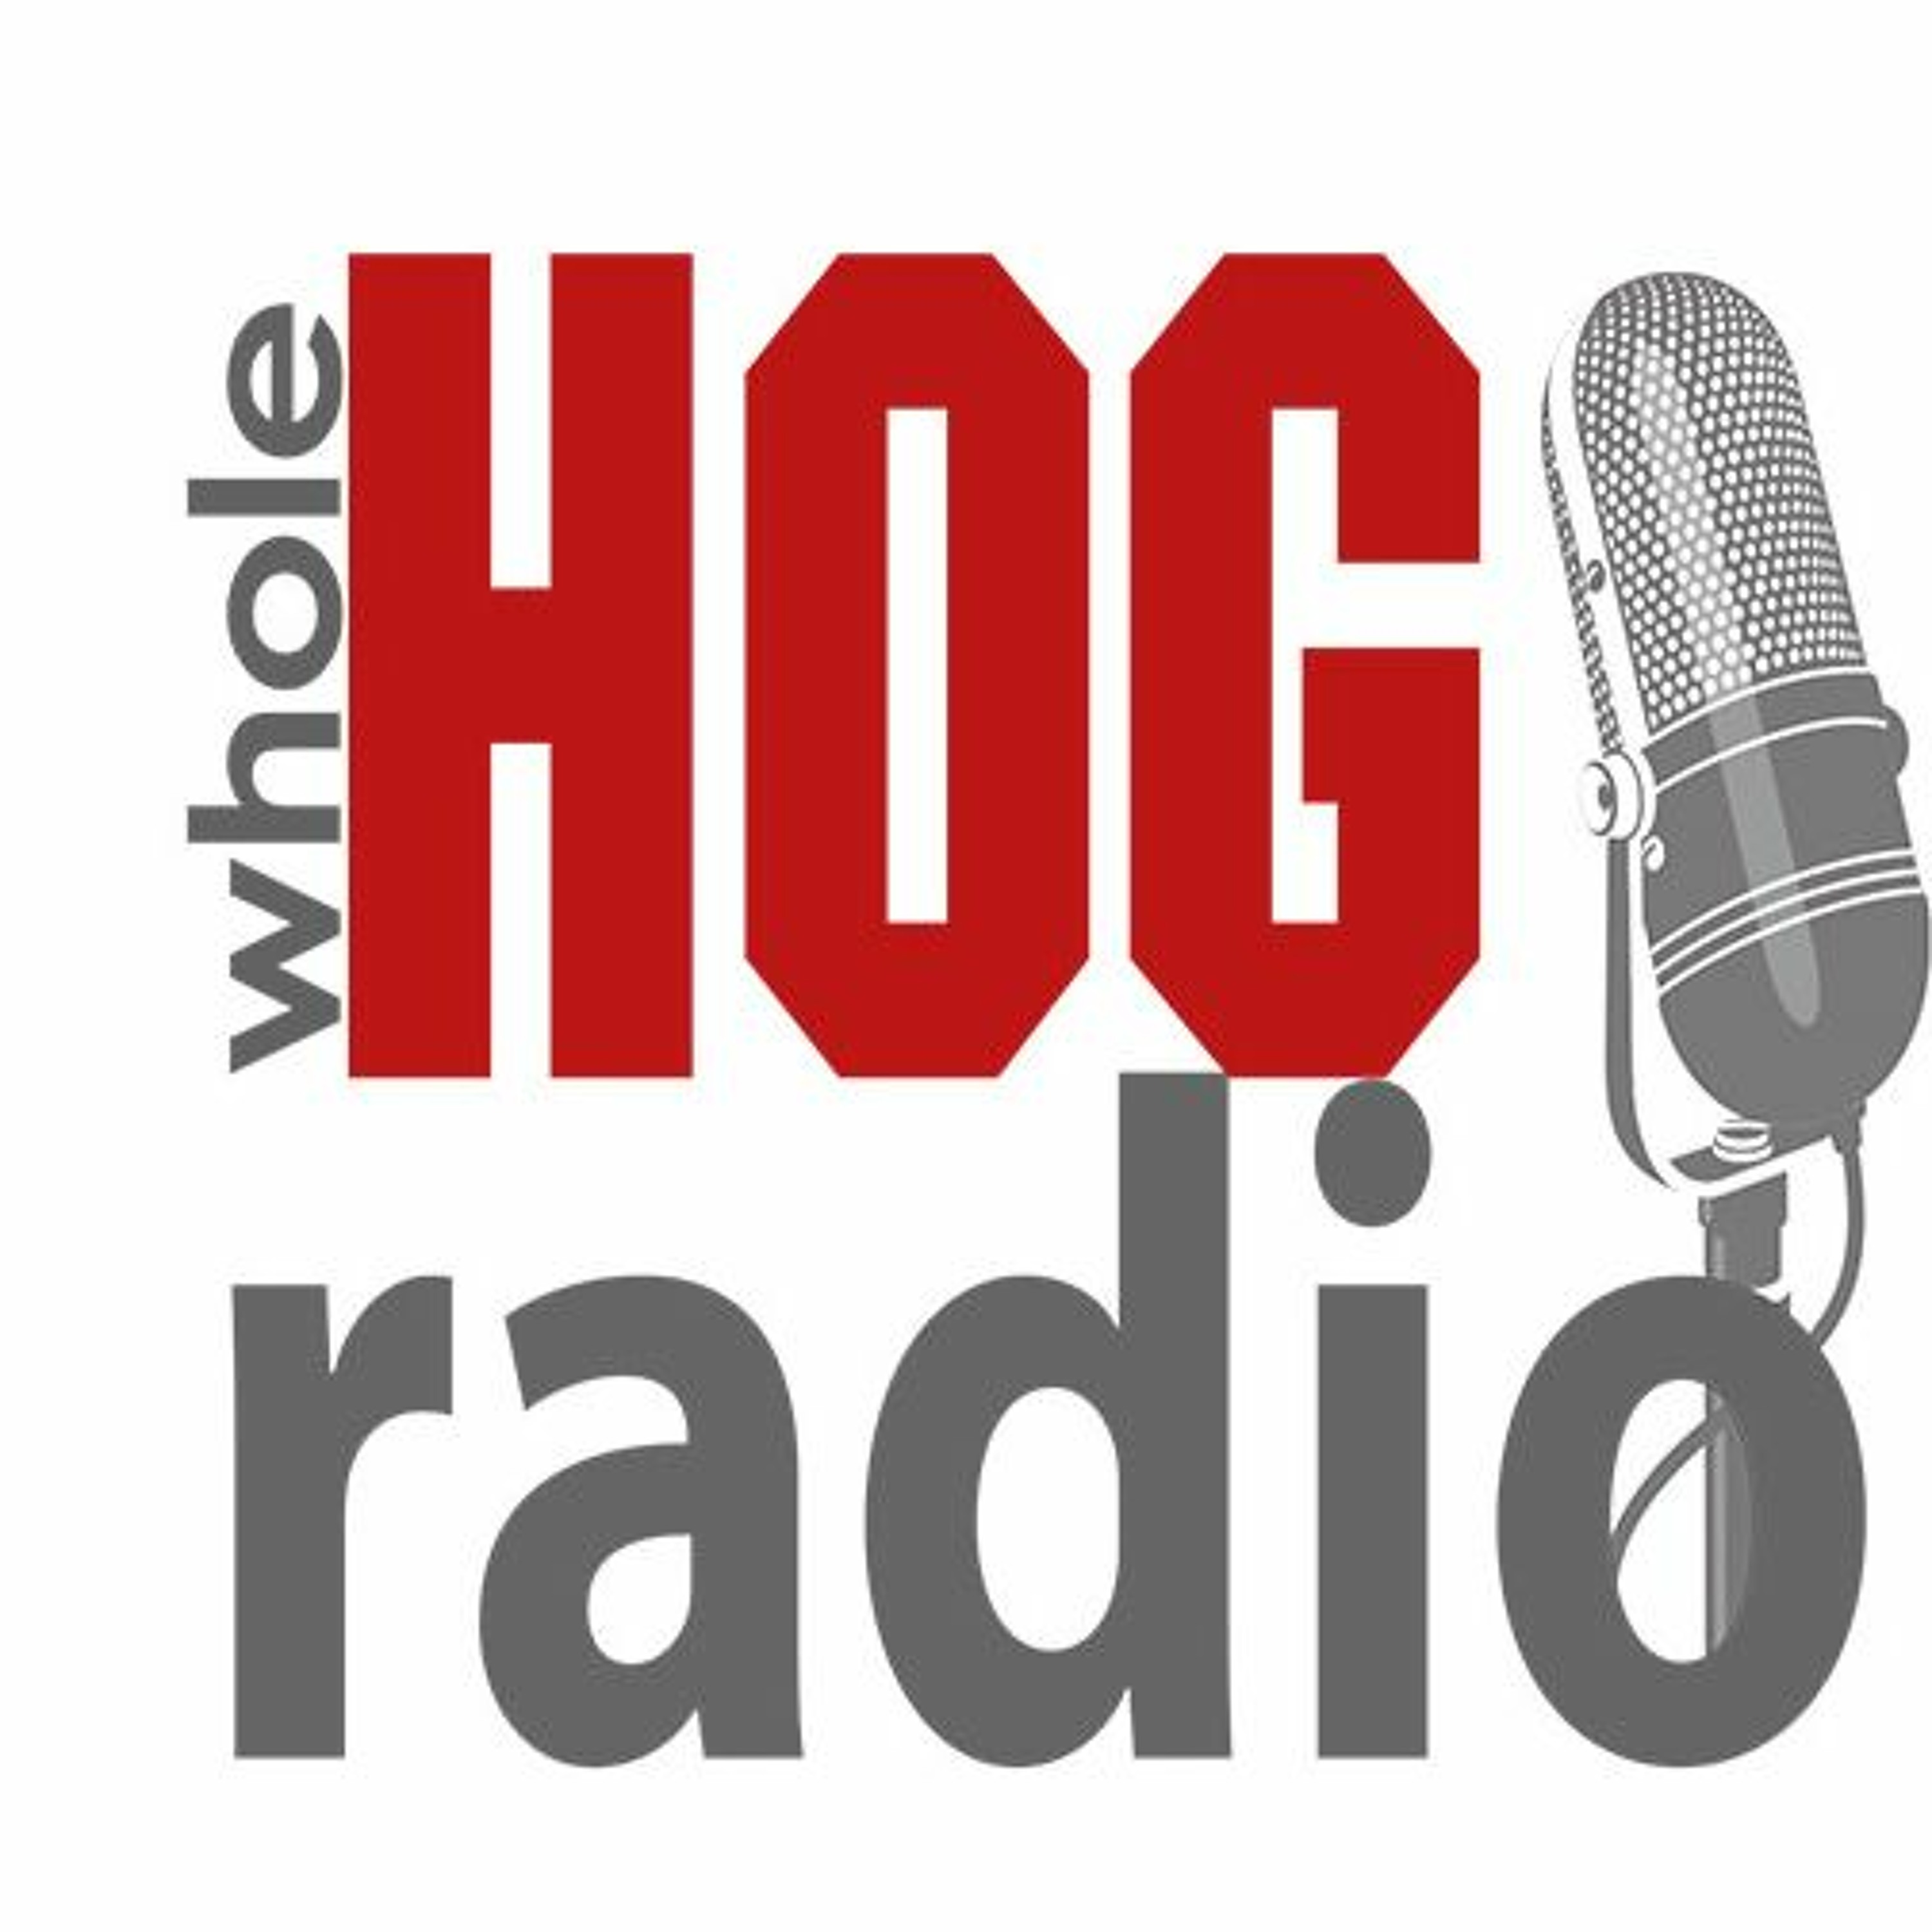 WholeHog Podcast: Arkansas basketball all-decade draft with Scottie Bordelon